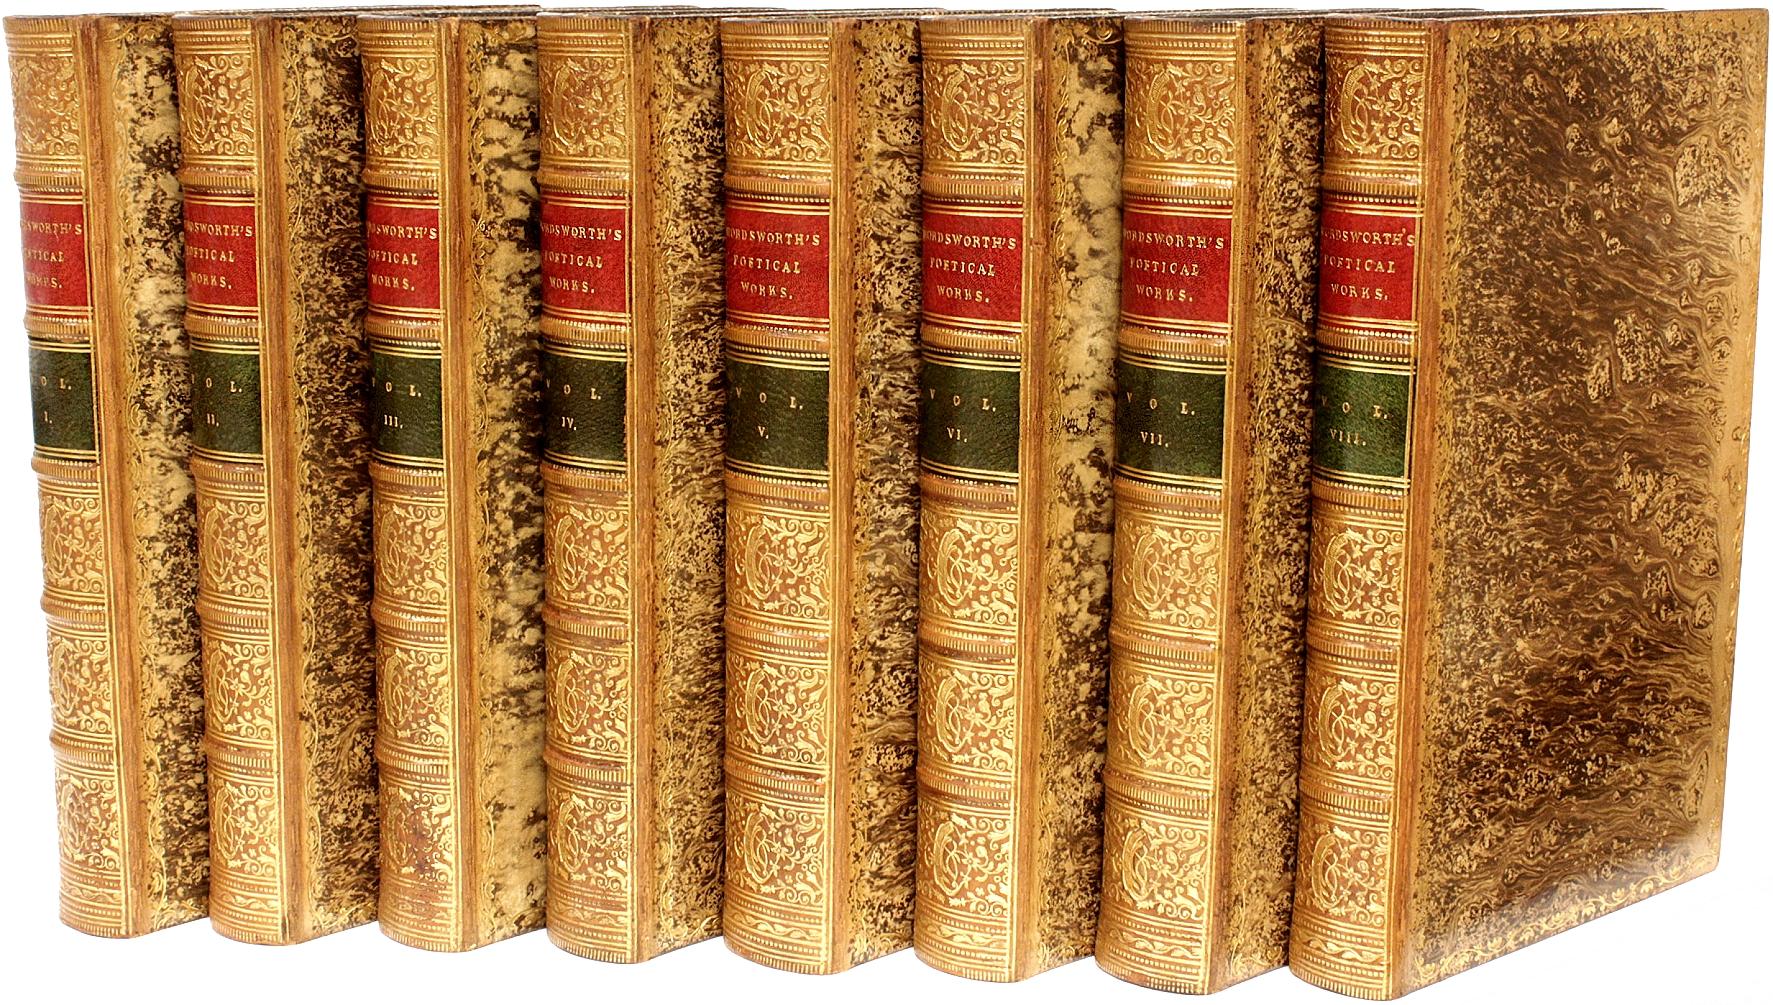 Author: WORDSWORTH, William. 

Title: The Poetical Works of William Wordsworth.

Publisher: London: Edward Moxon, 1841.

NEW EDITION. 8 vols., 6-3/4